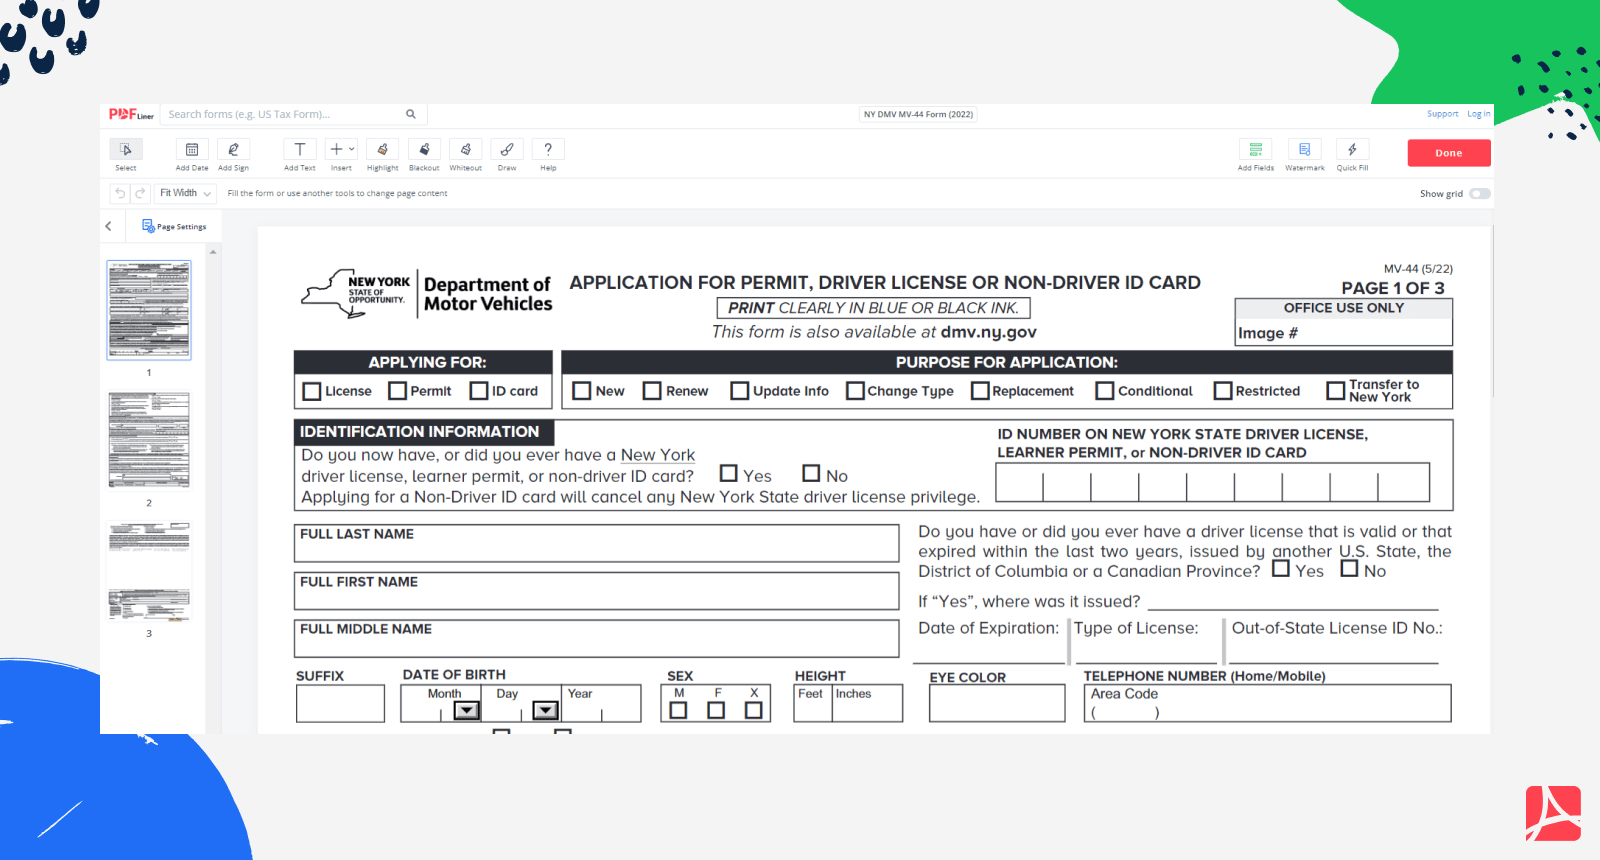 NY DMV MV-44 Form on PDFLiner